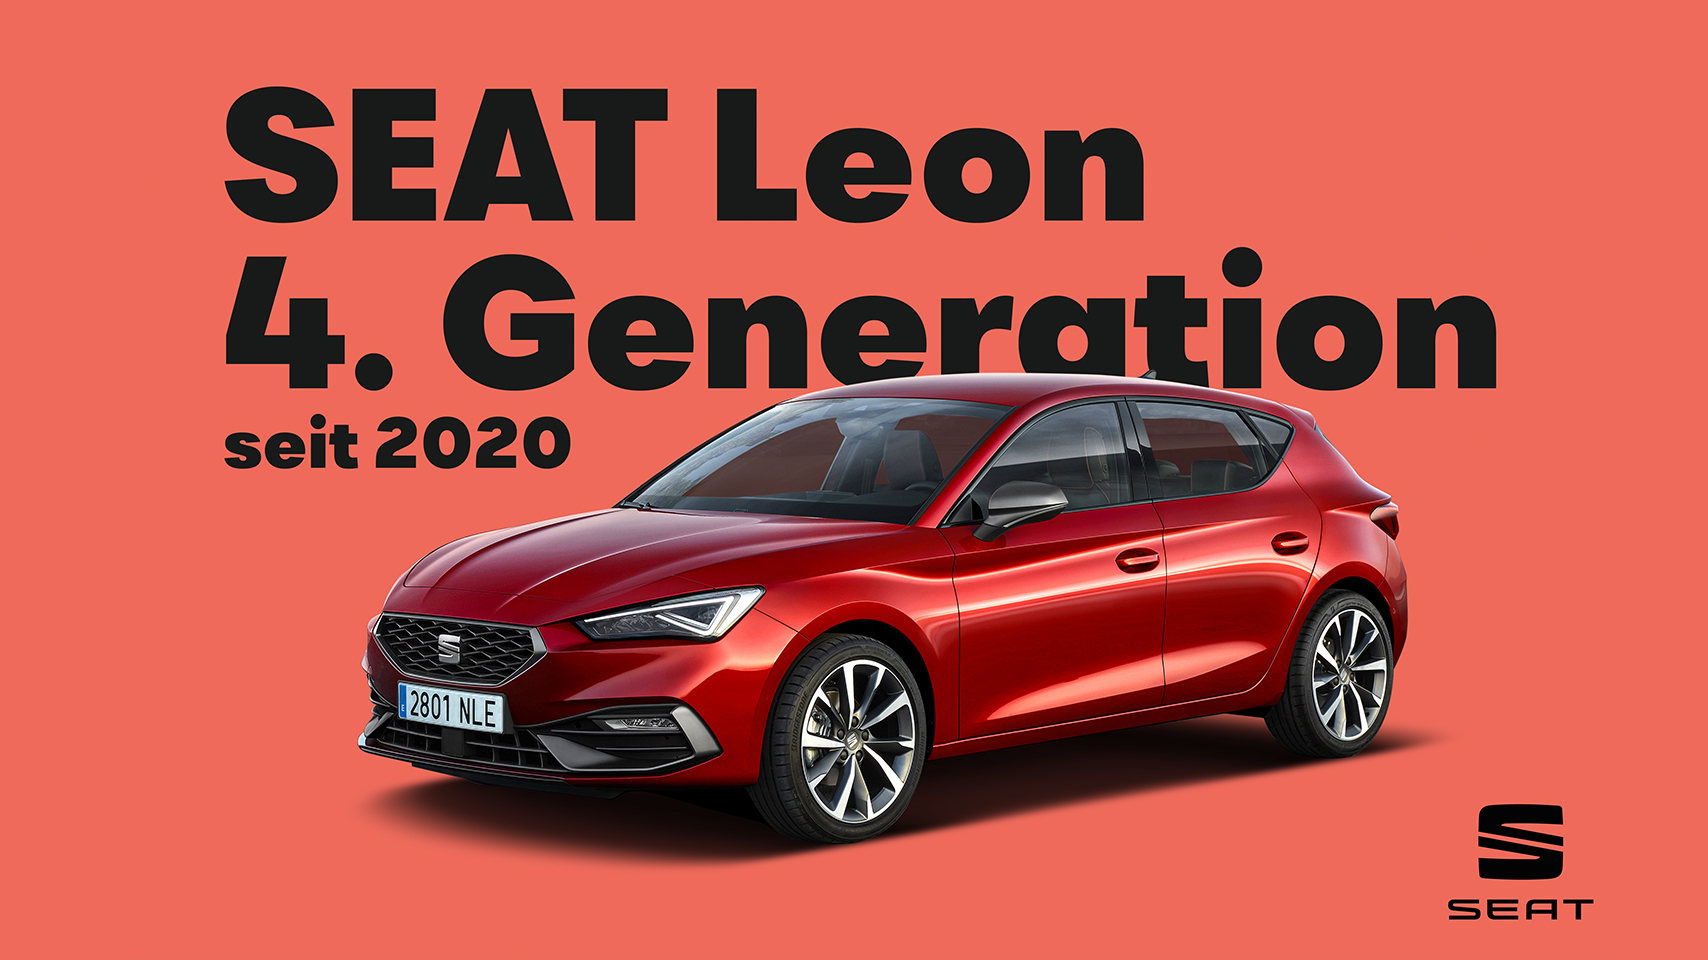 SEAT Leon 4. Generation: 2020